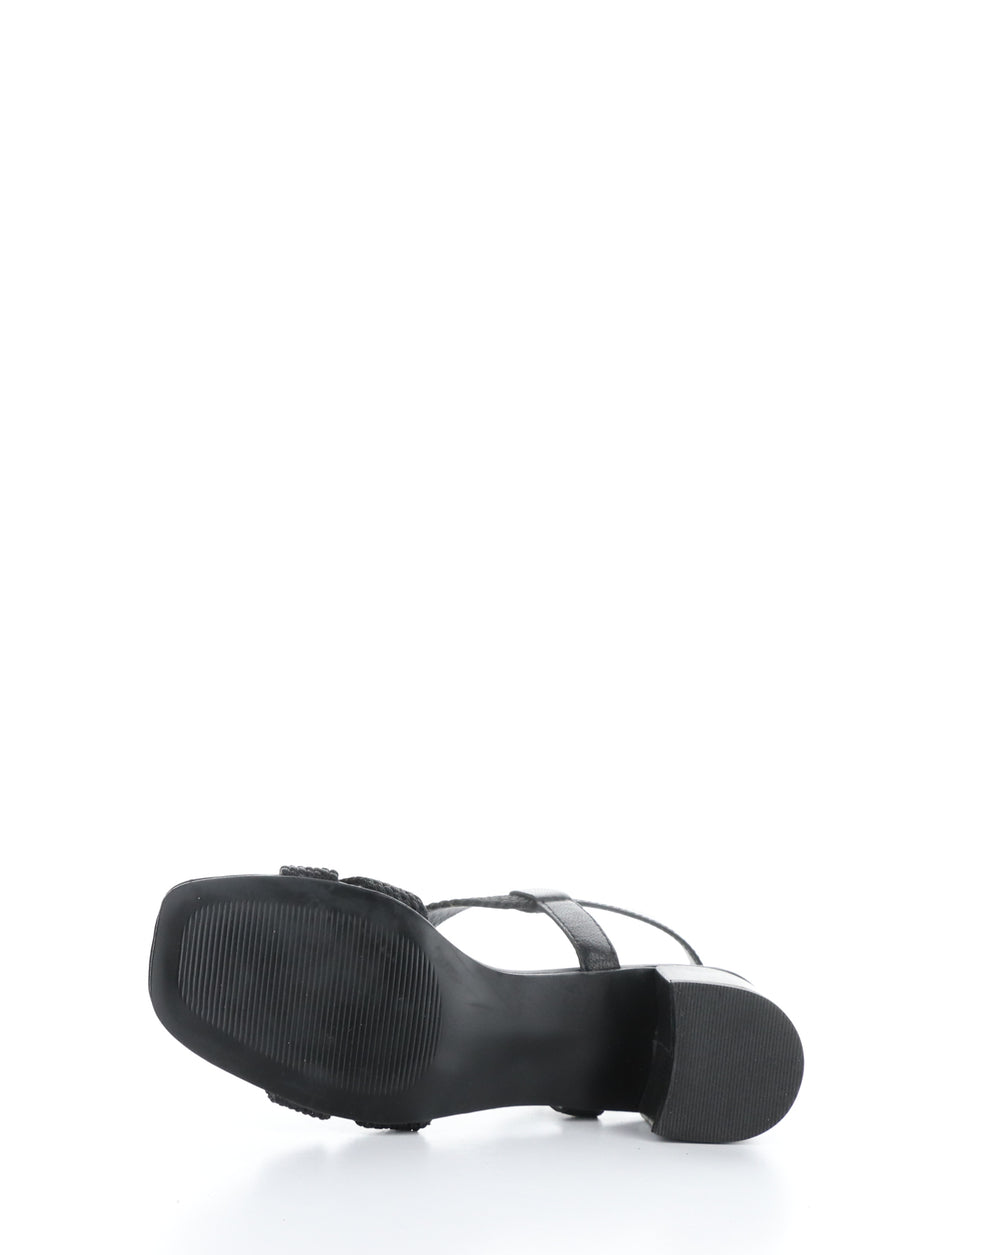 UPBEAT BLACK Buckle Sandals